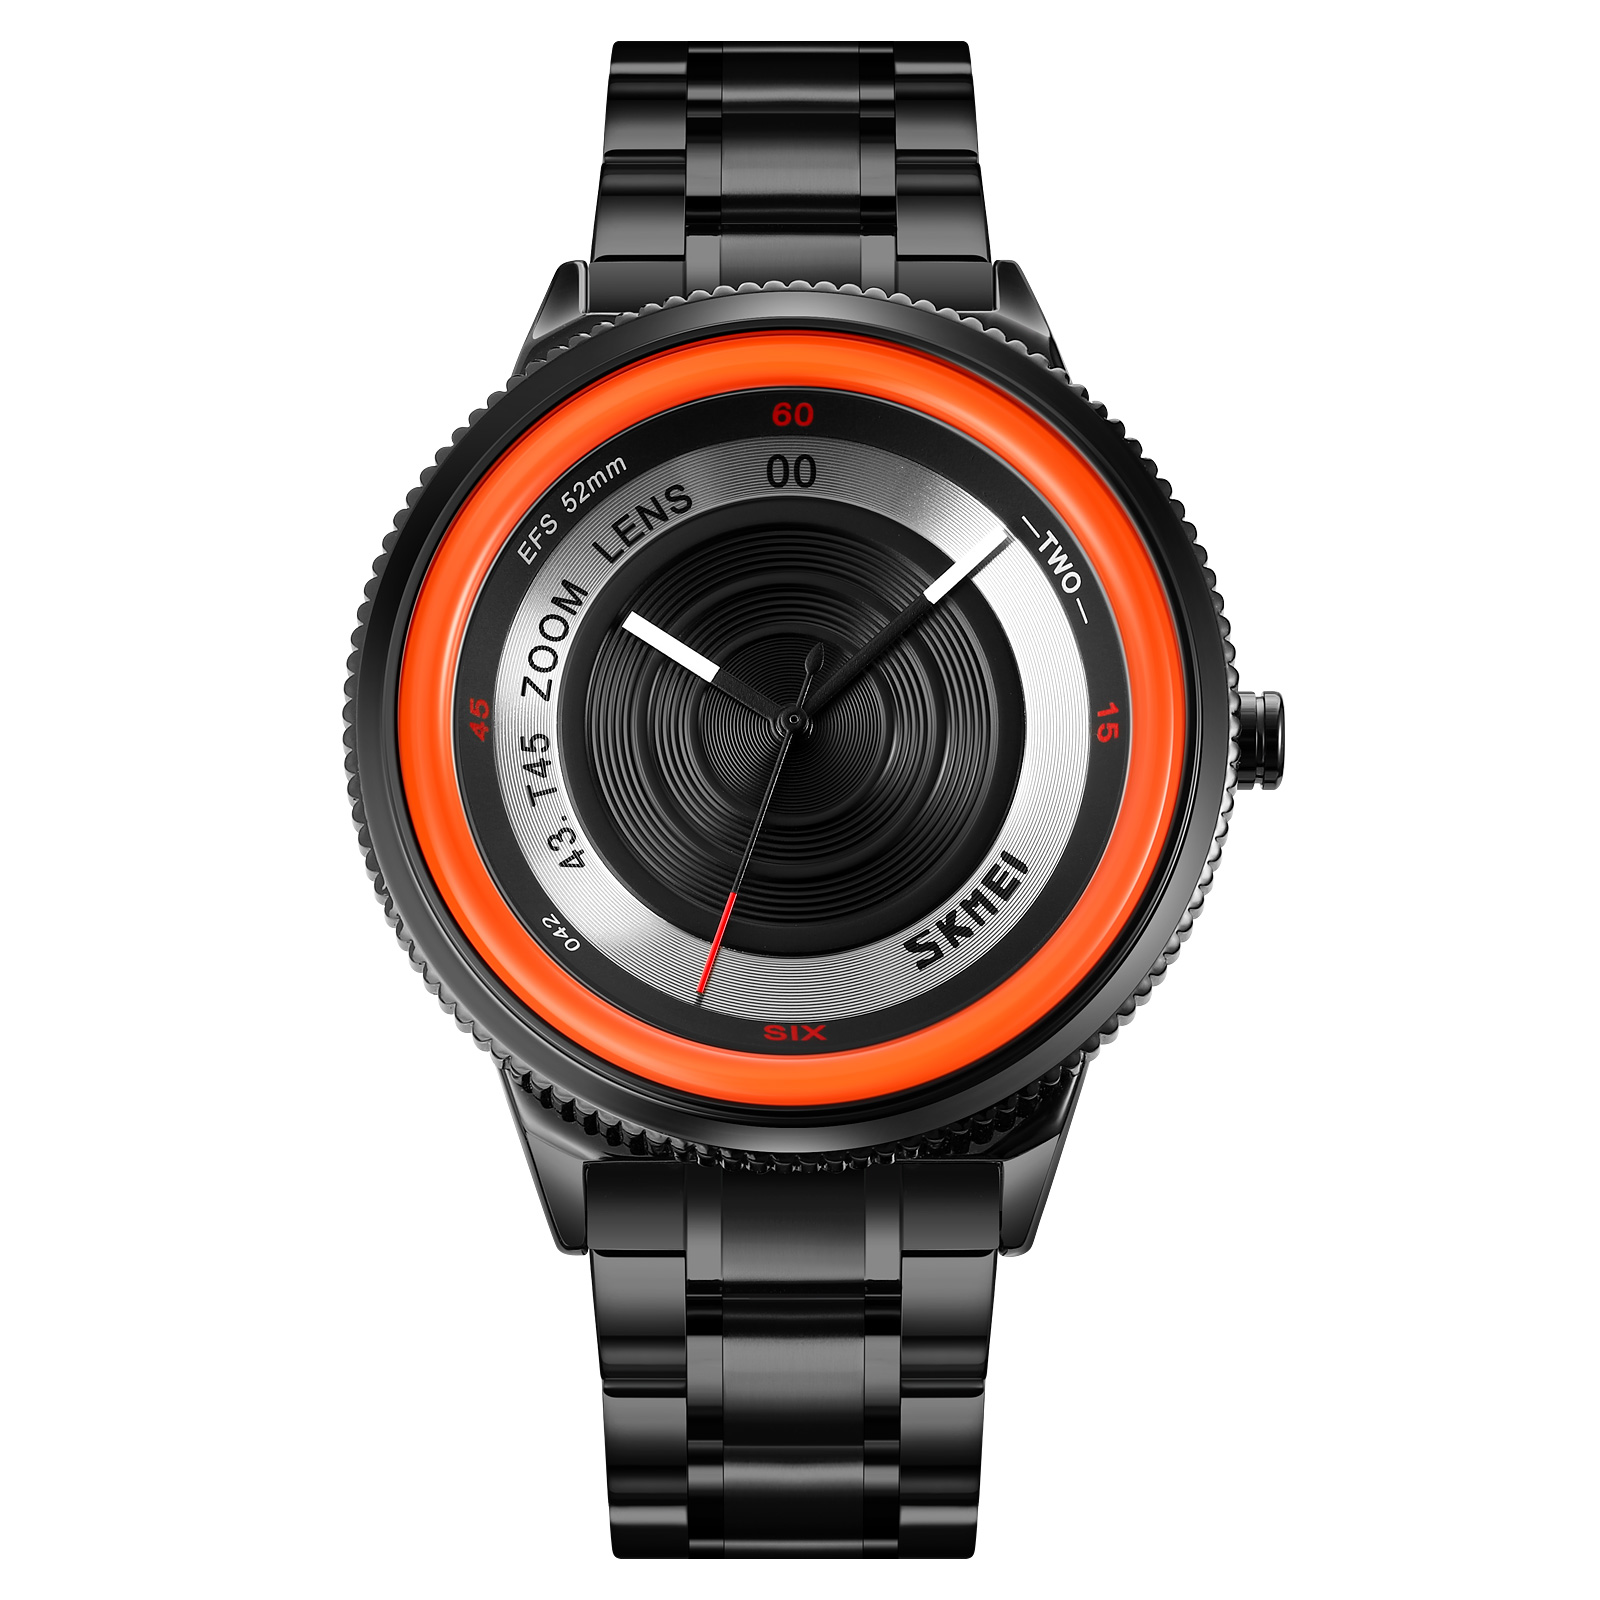 wristwatches stainless steel men black-Skmei Watch Manufacture Co.,Ltd